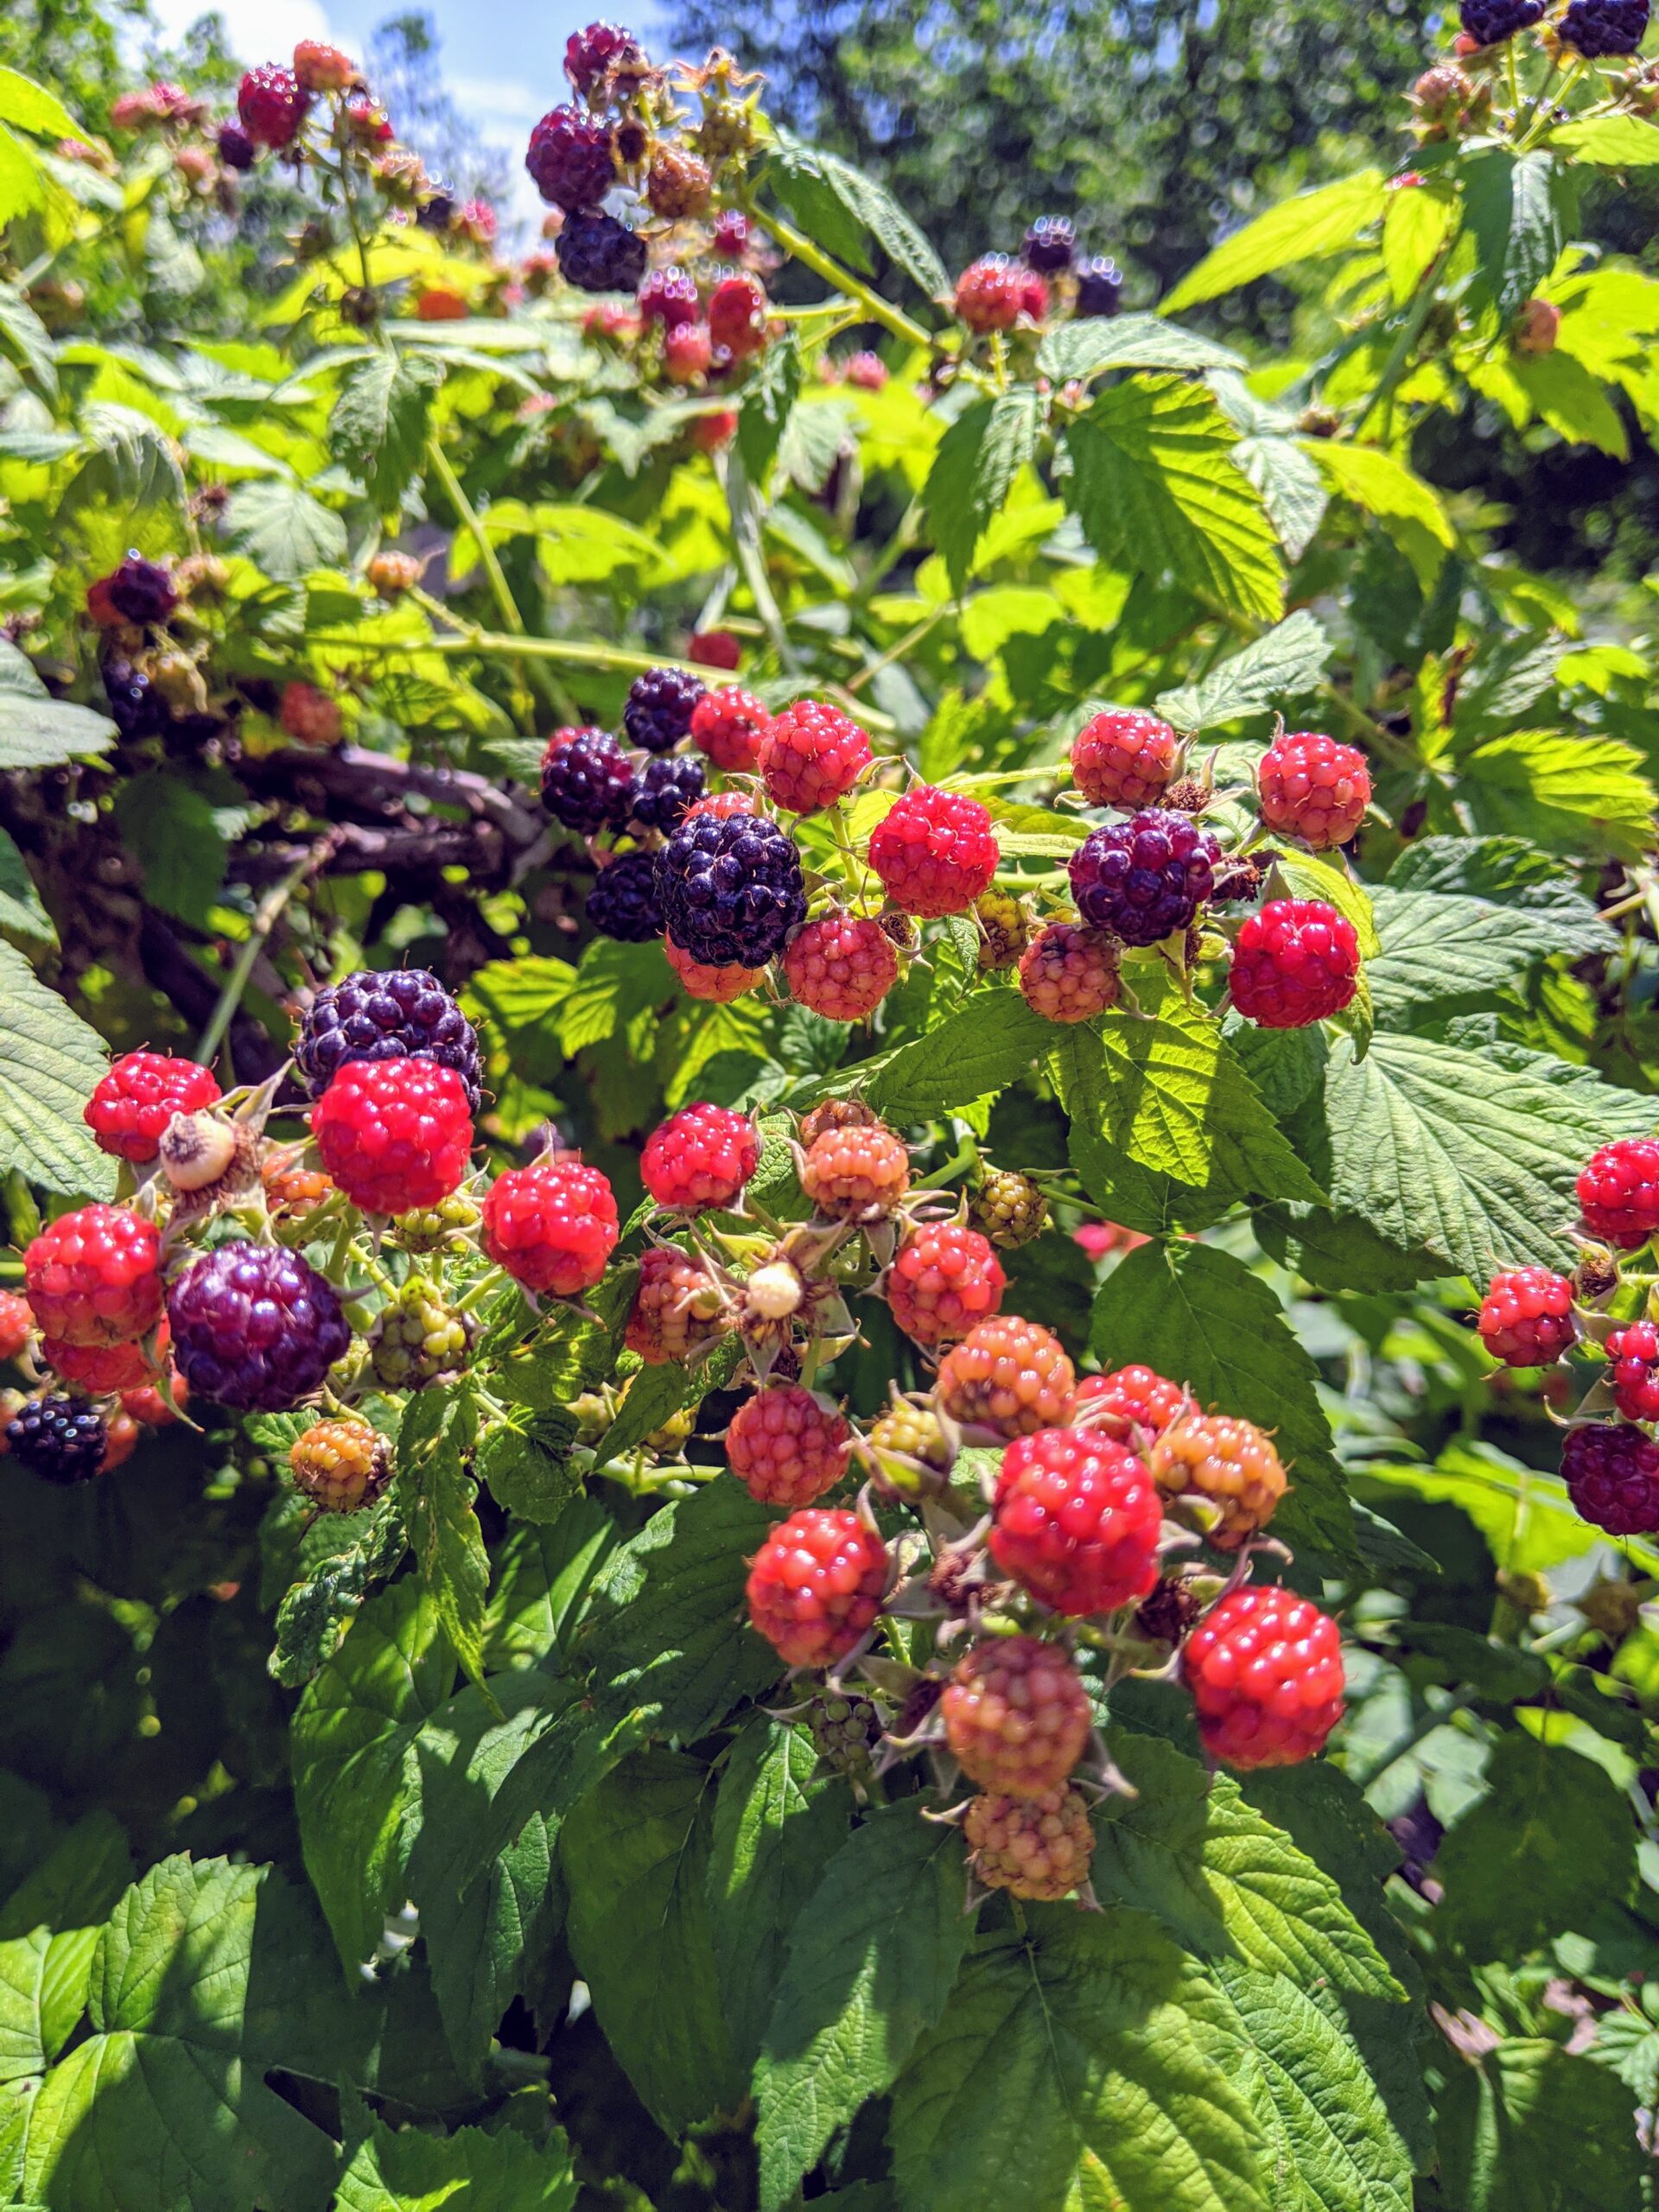 Picking Sweet Raspberries at the Farm - The Martha Stewart Blog